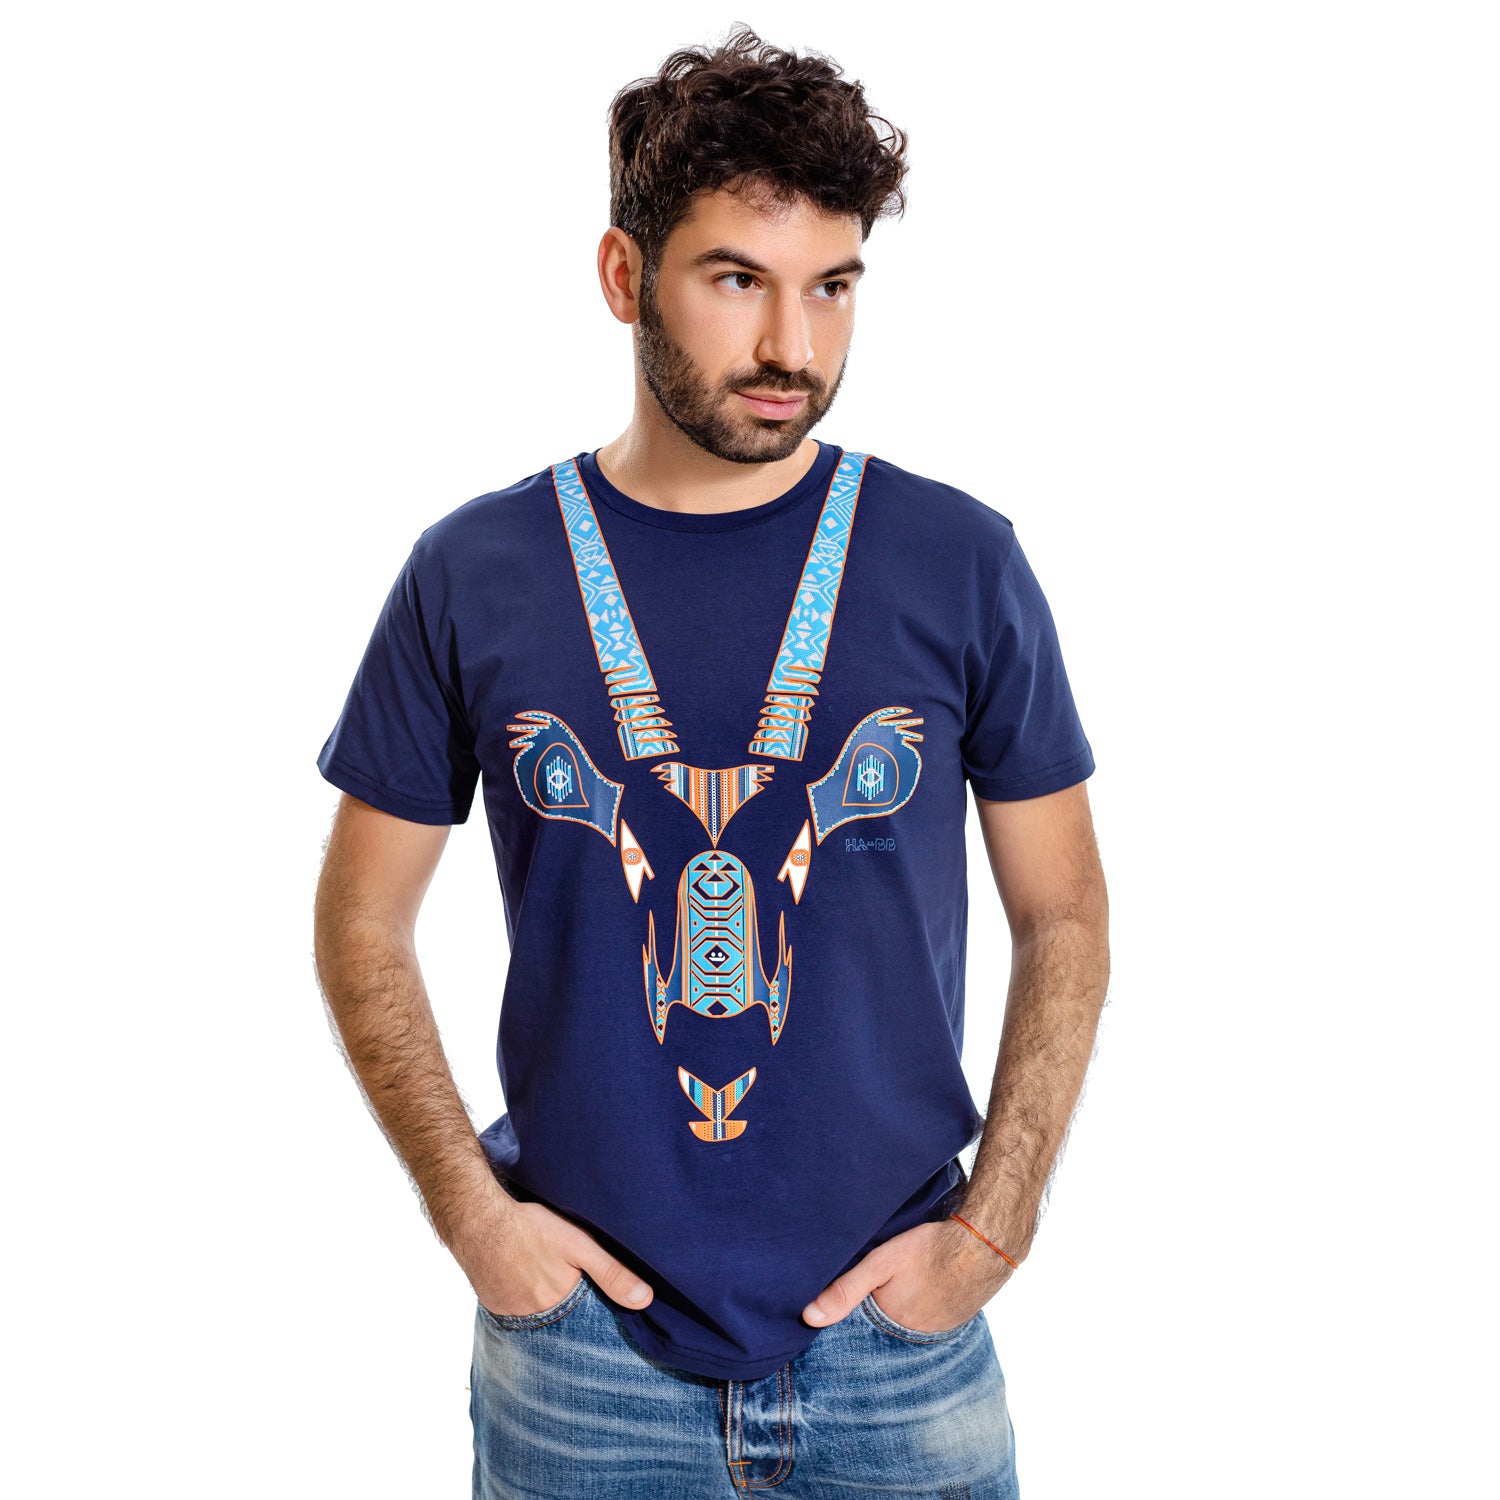 Oryx, Tradition, WWF, blue t-shirt, tee, blue, orange print, man, front view